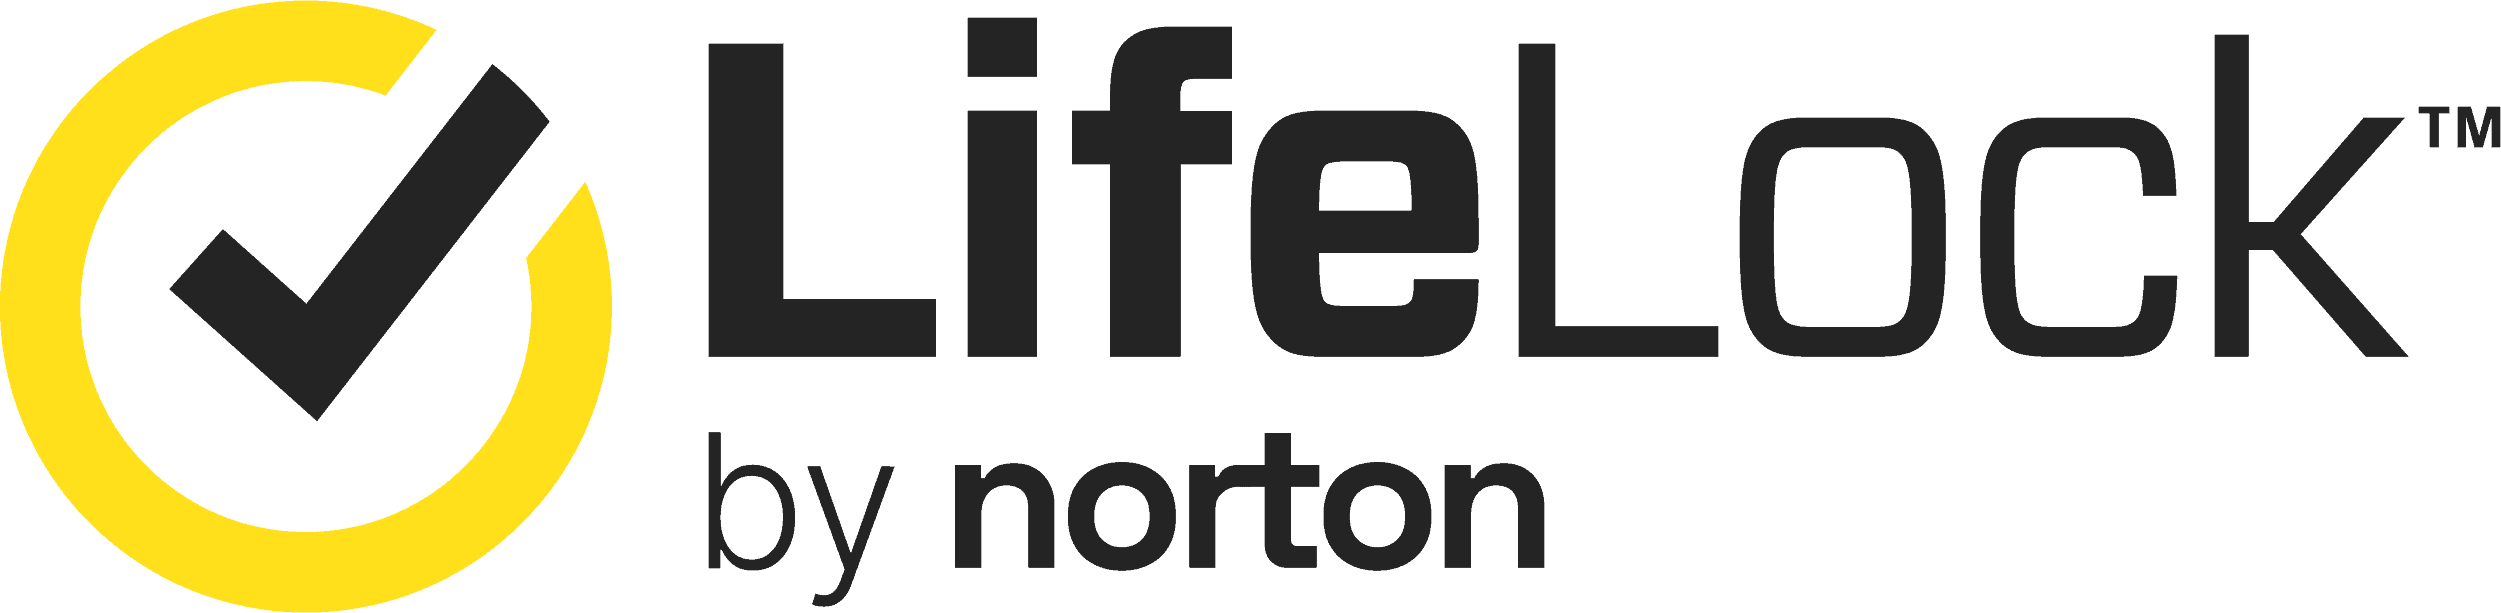 LifeLock - logotipo do produto